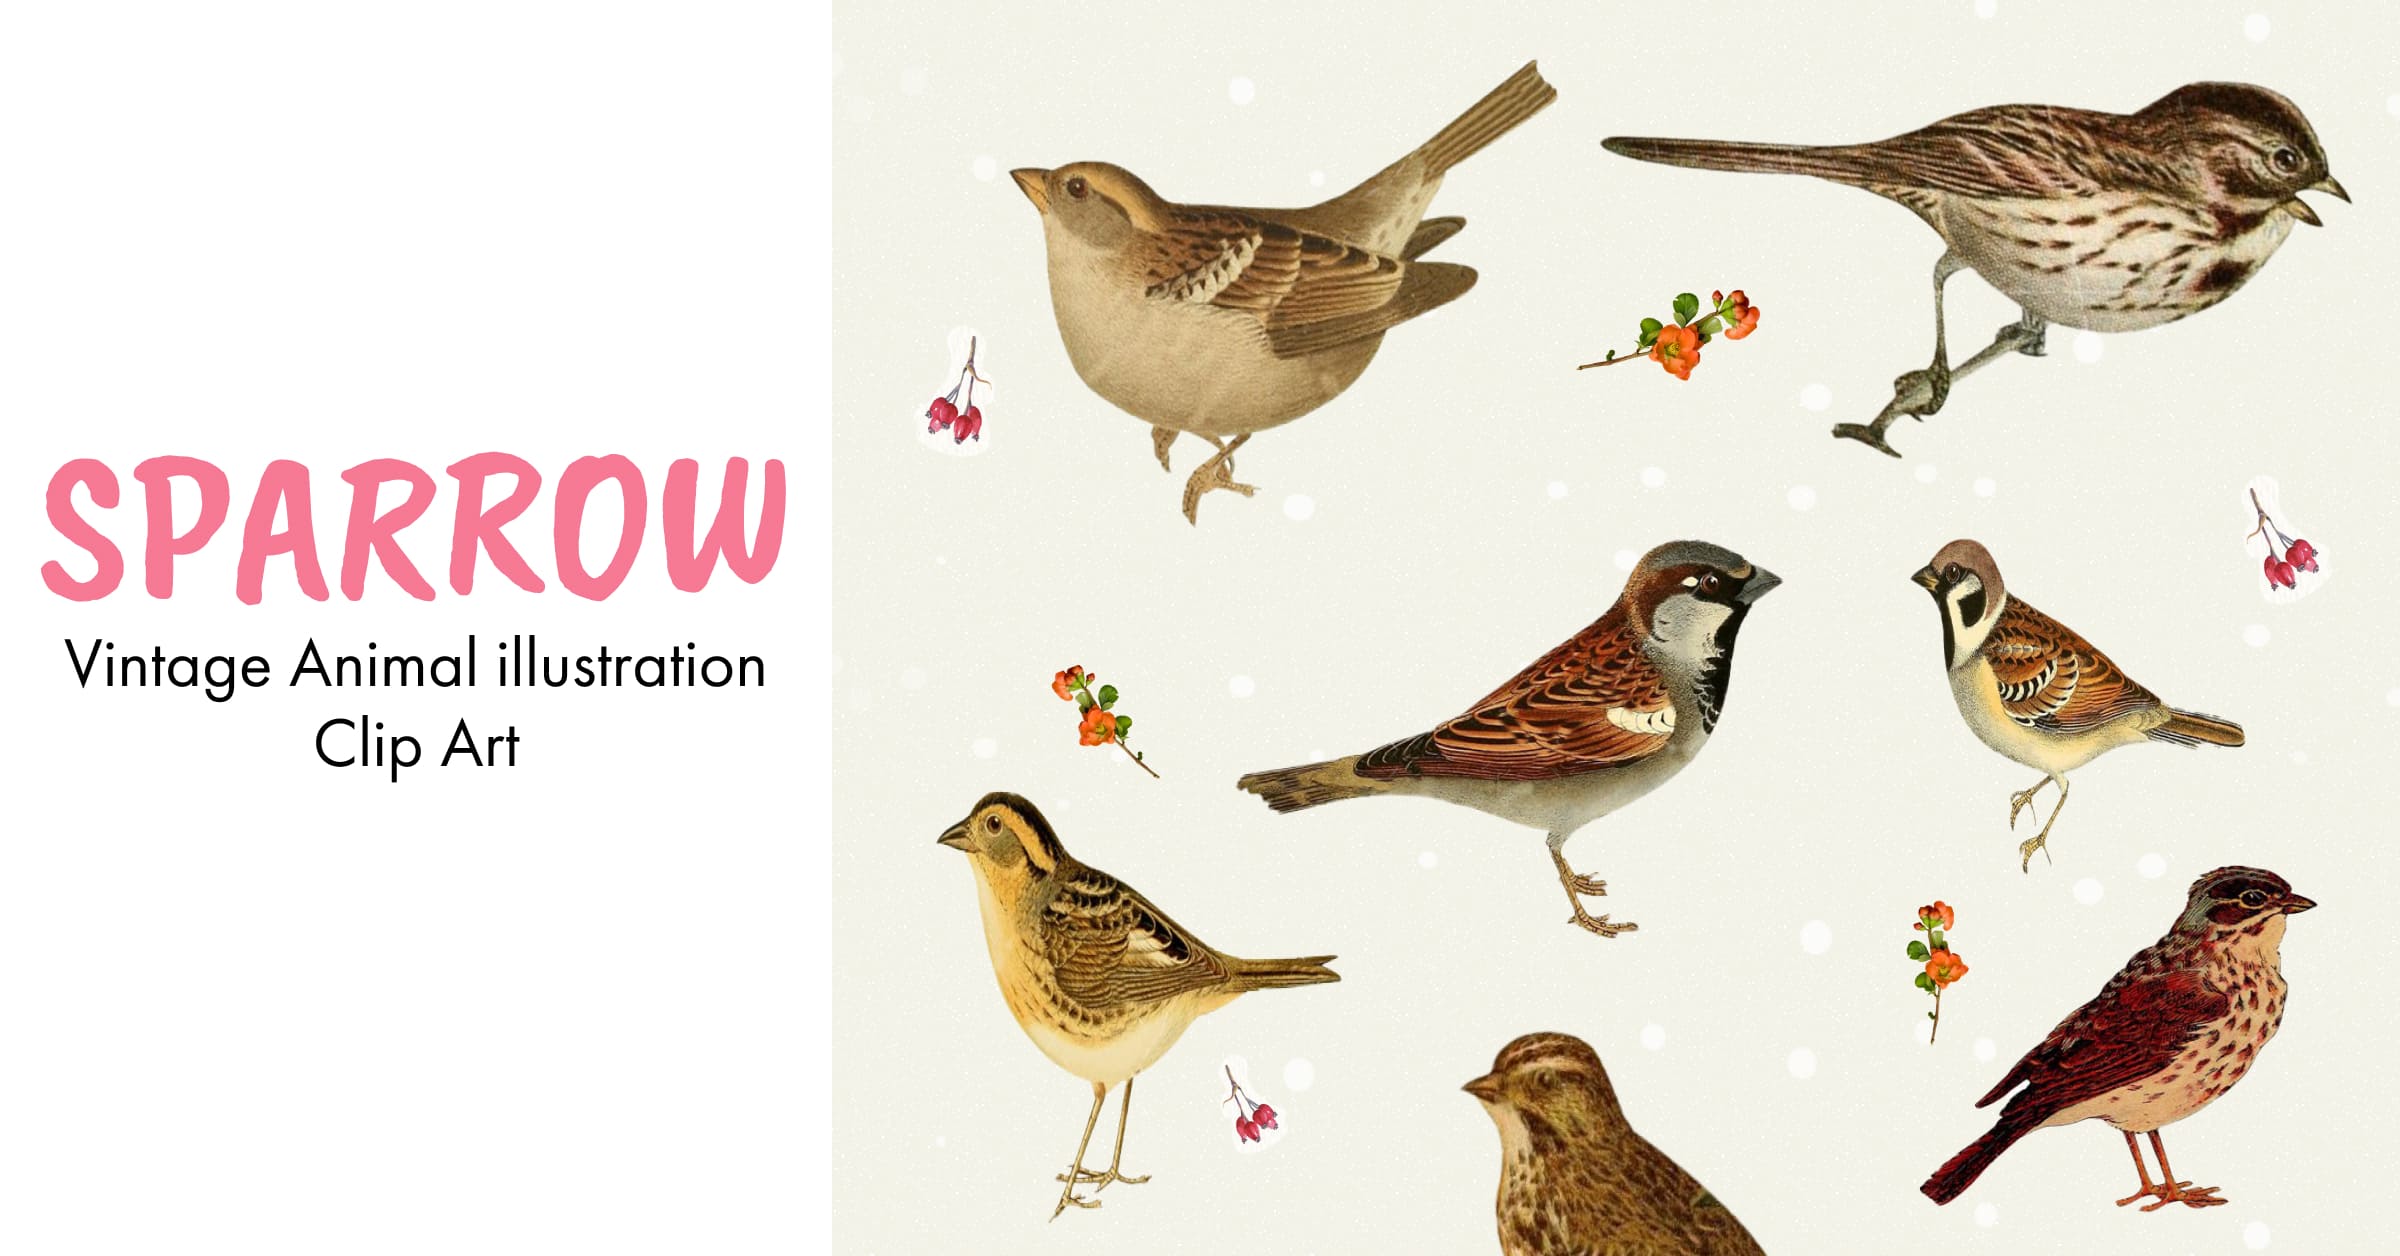 Sparrow vintage animal illustration clip art - Facebook image preview.